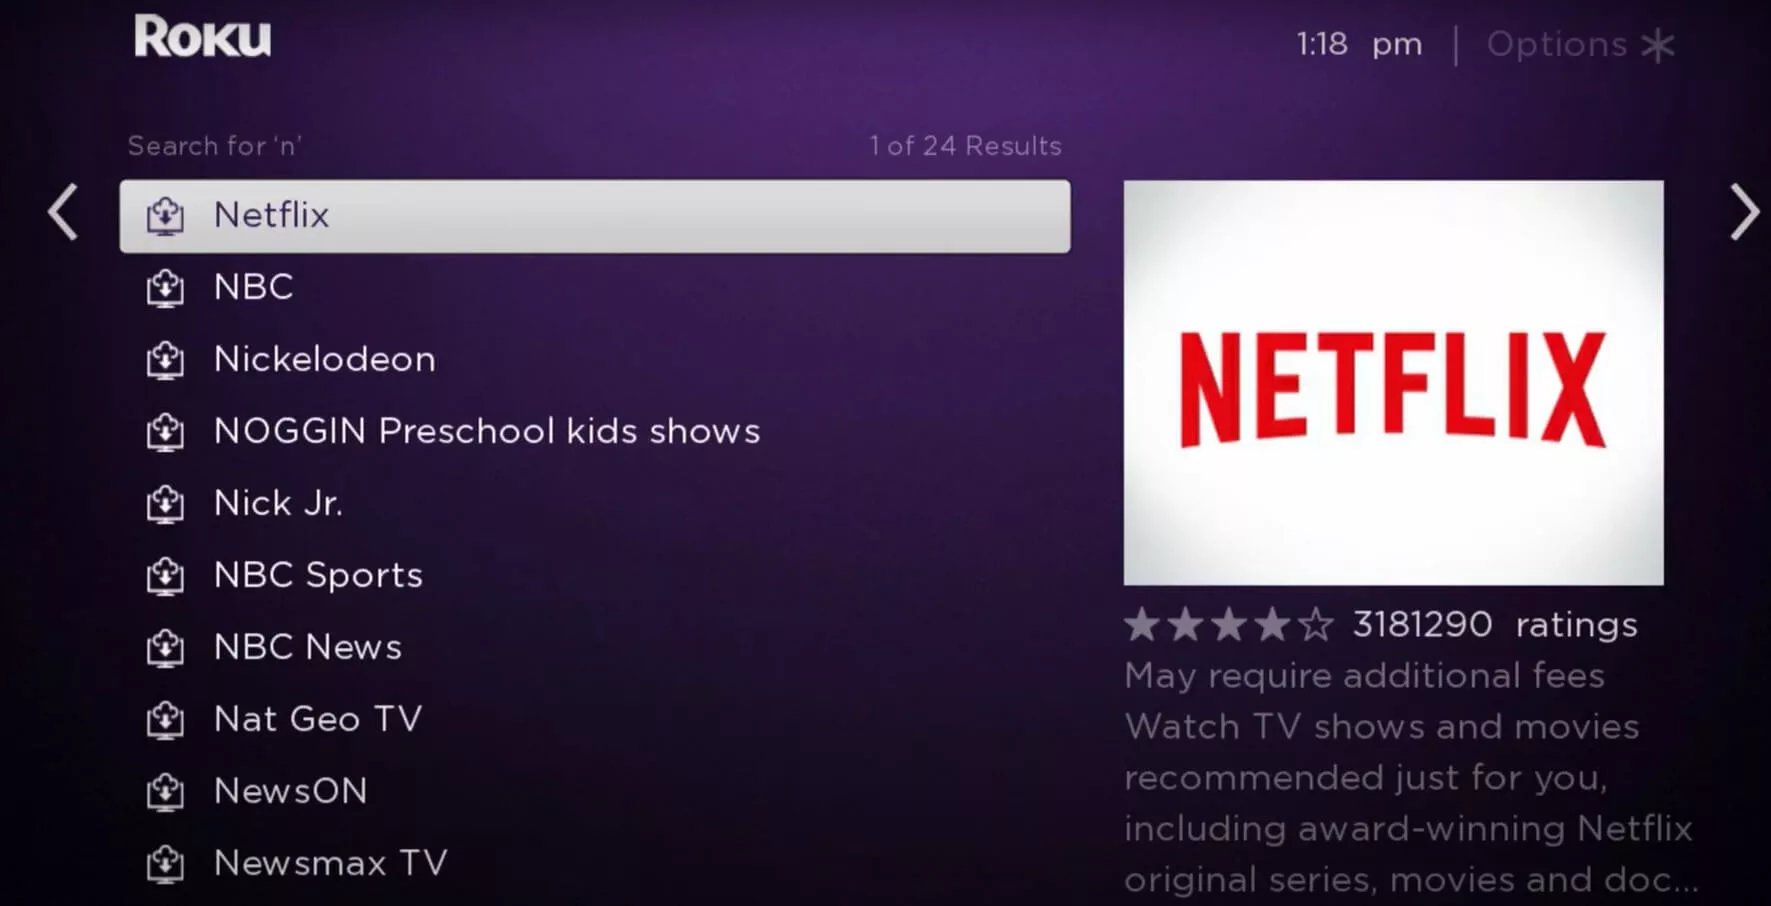 Steps To Access Netflix.com/TV8 On Roku TV